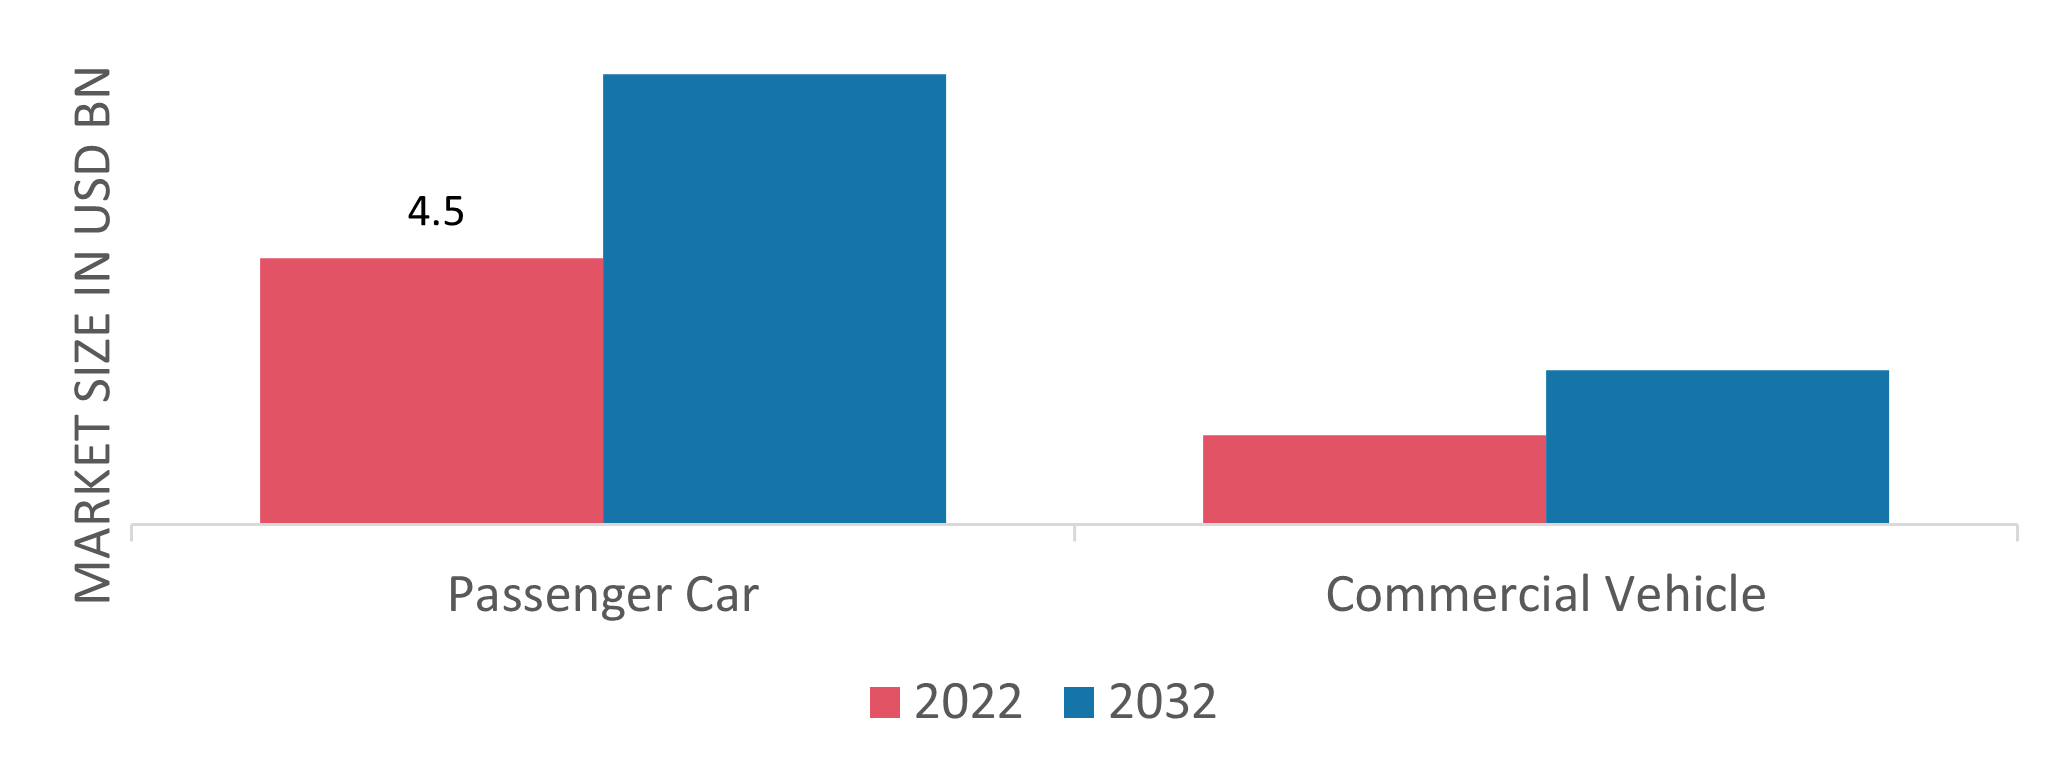 Automotive Temperature Sensor Market, by Vehicle Type, 2022 & 2032